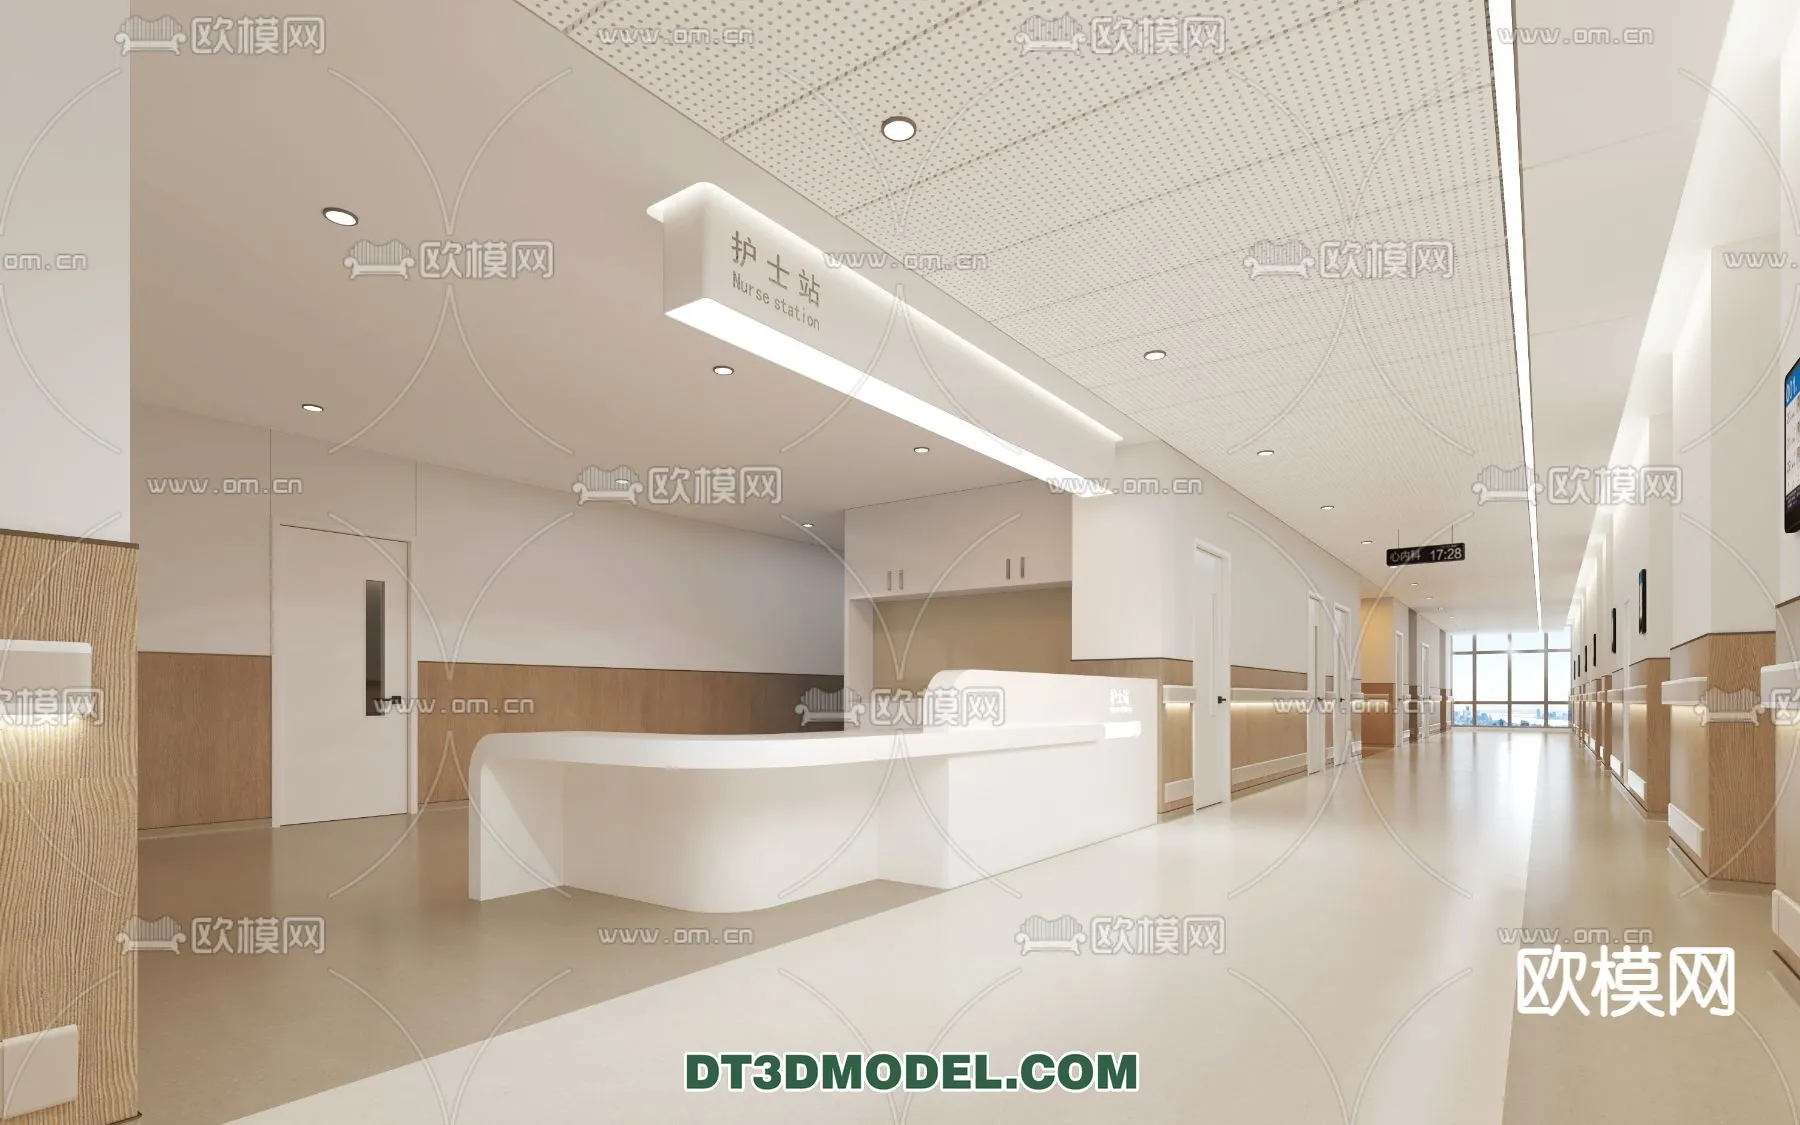 HOSPITAL 3D SCENES – MODERN – 0095